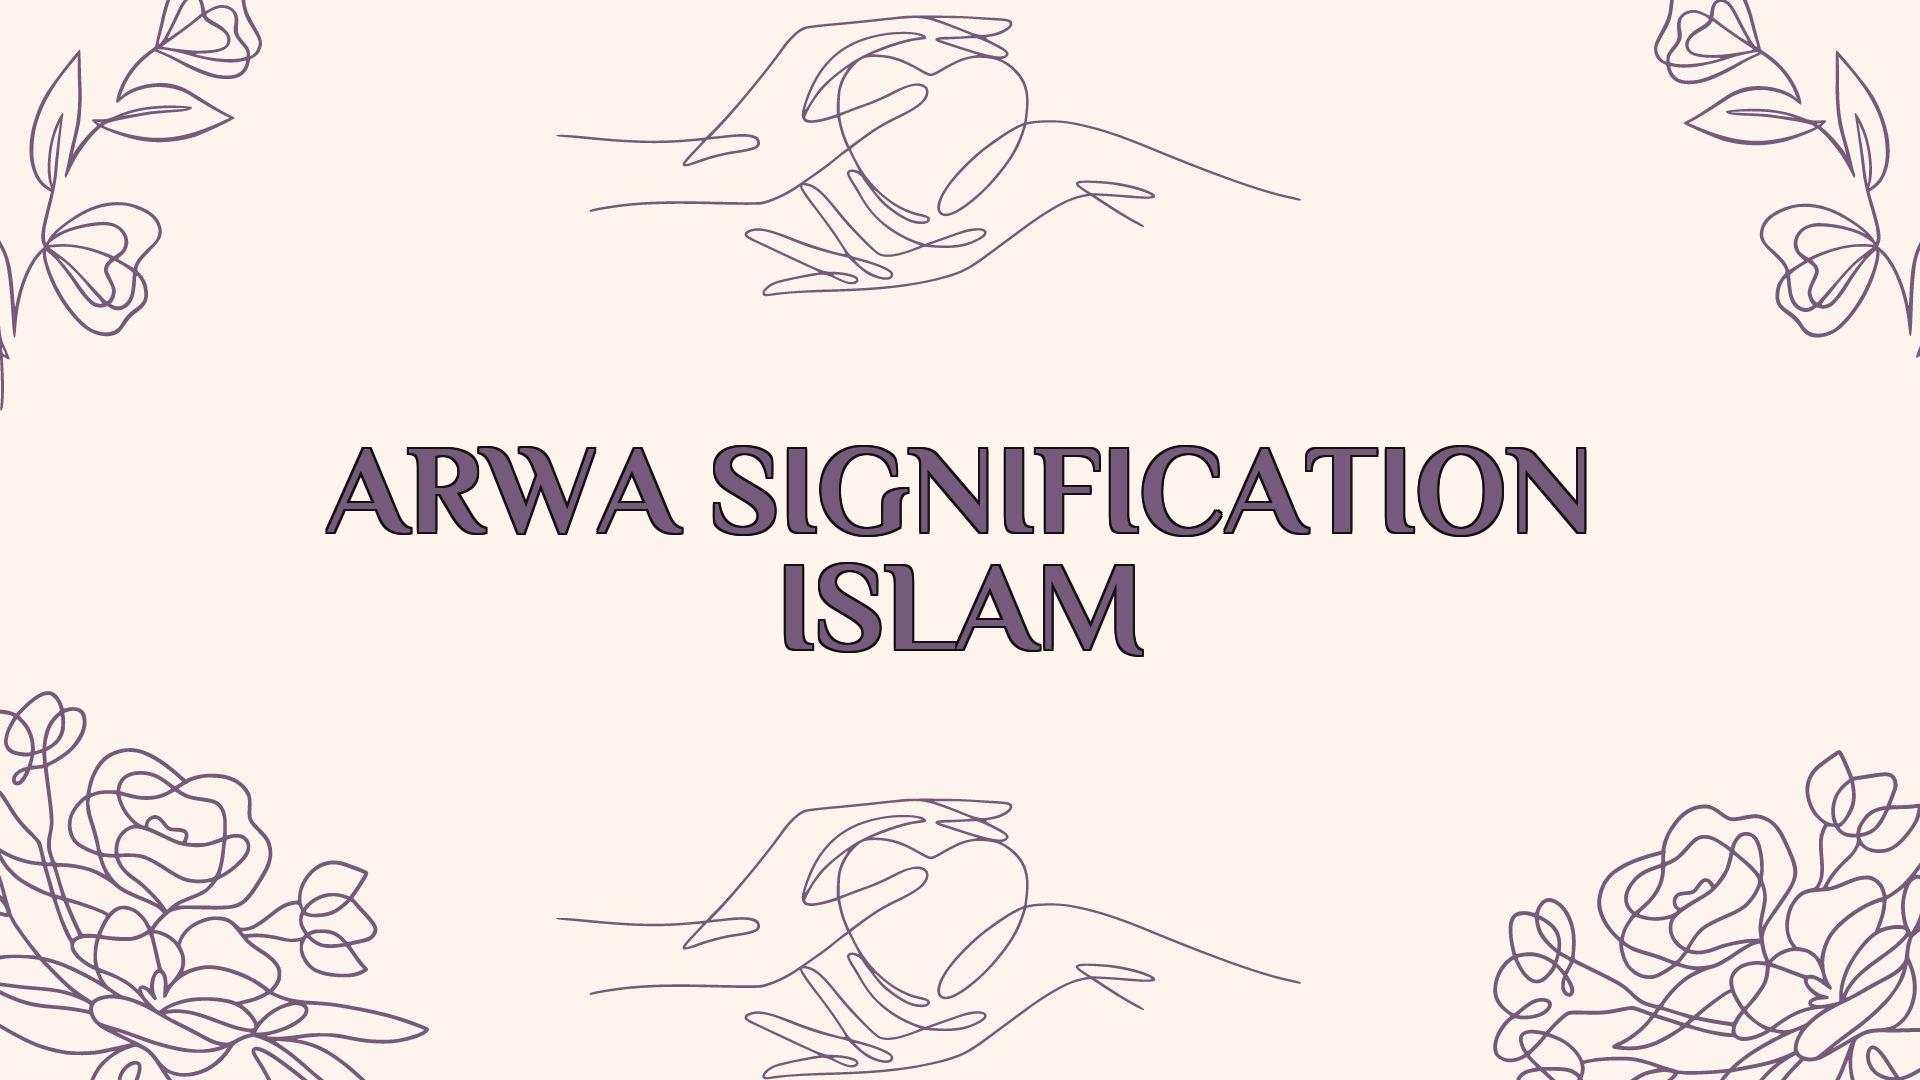 arwa signification islam